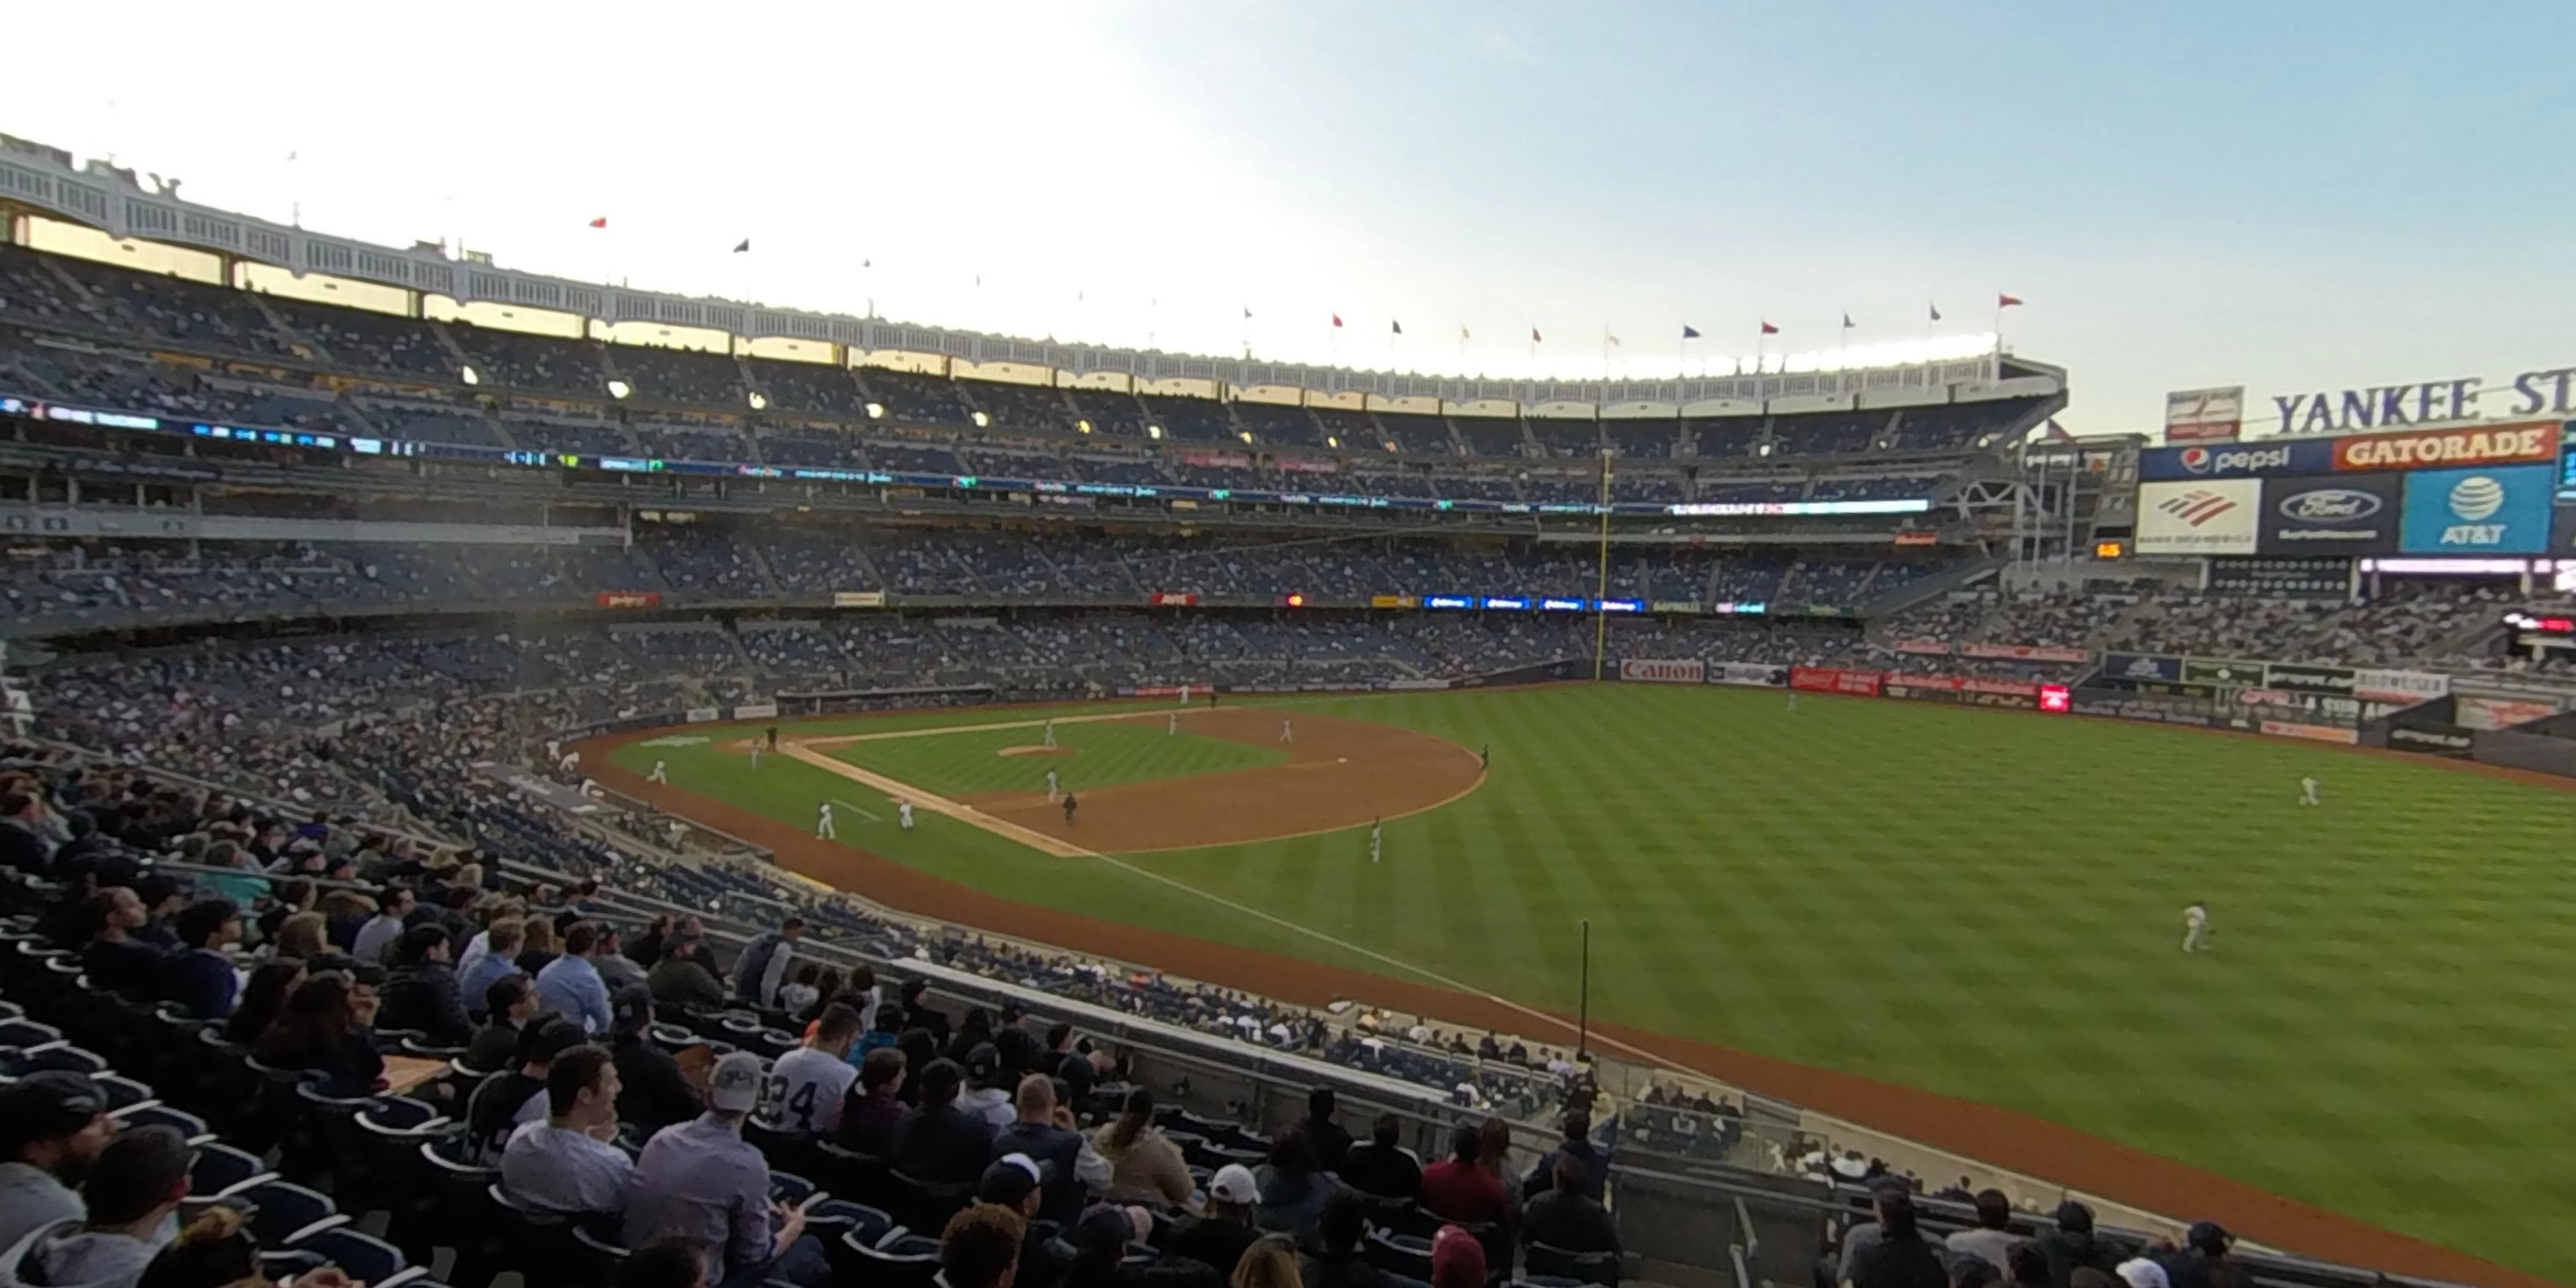 section 210 panoramic seat view  for baseball - yankee stadium